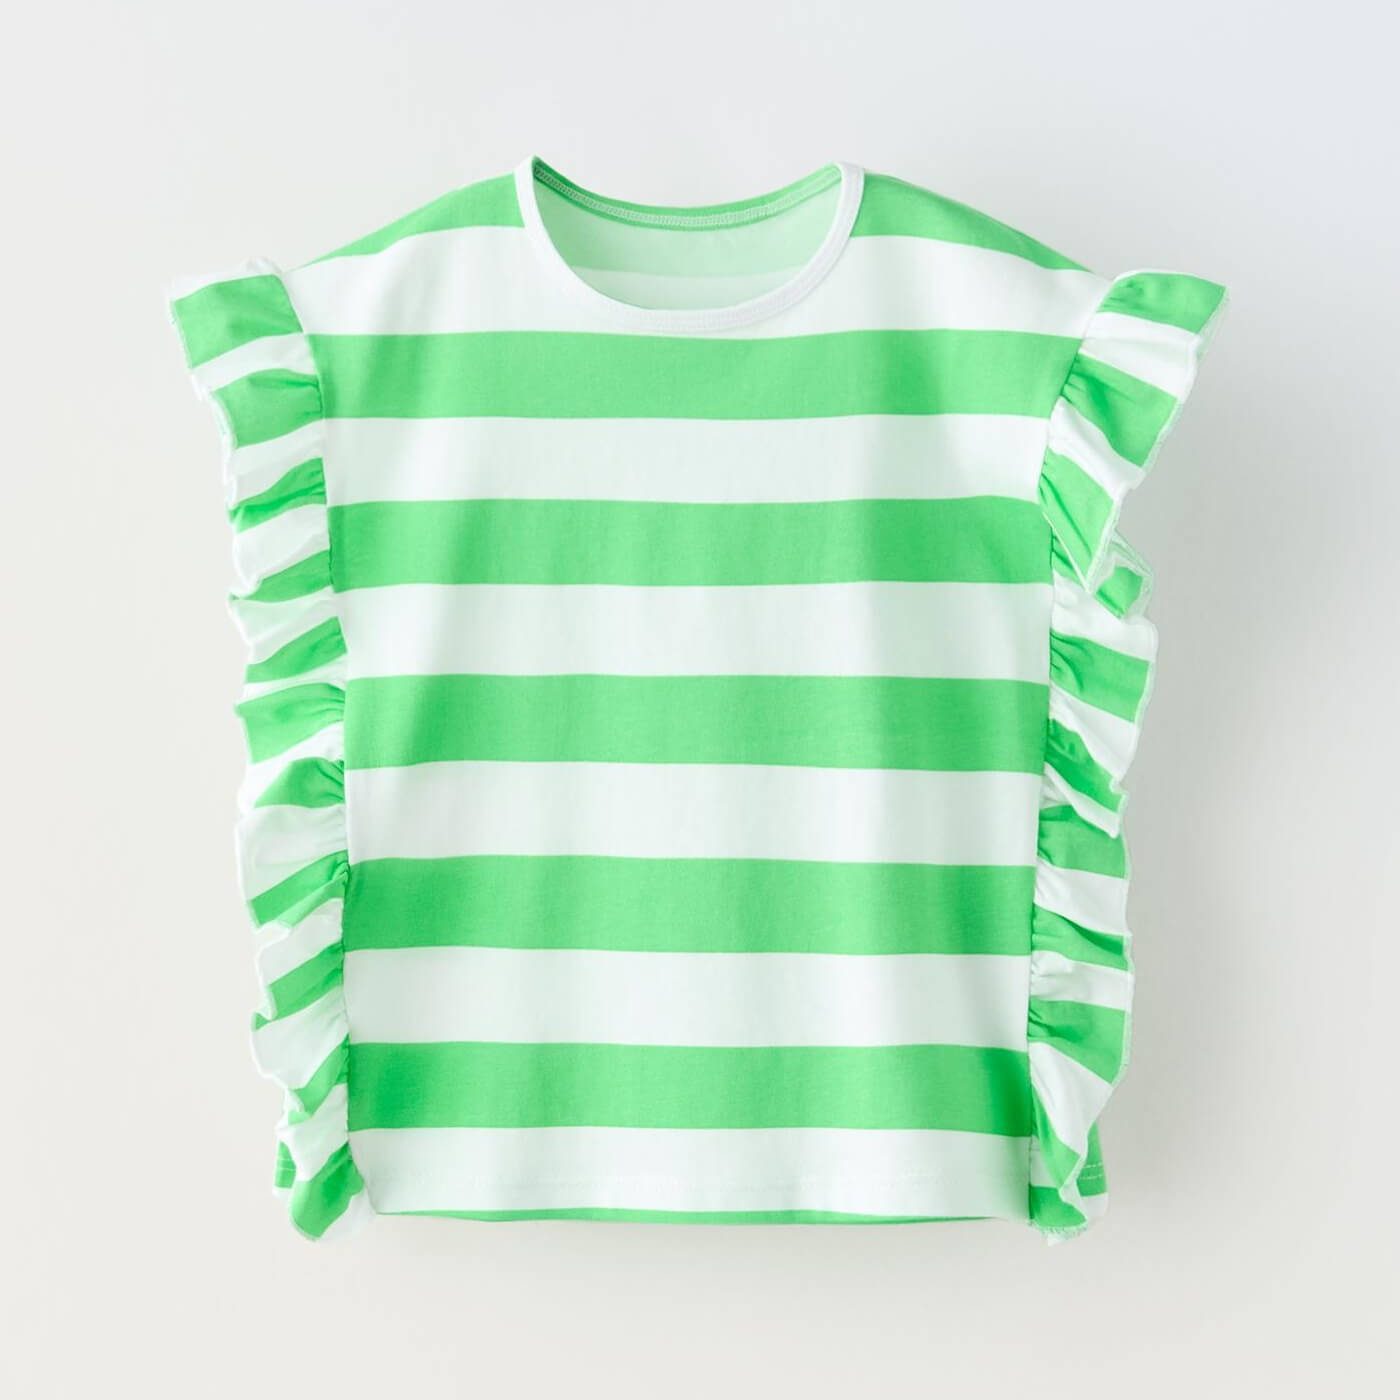 Футболка Zara Striped With Ruffle Trims, зеленый/белый футболка zara striped with patch белый черный